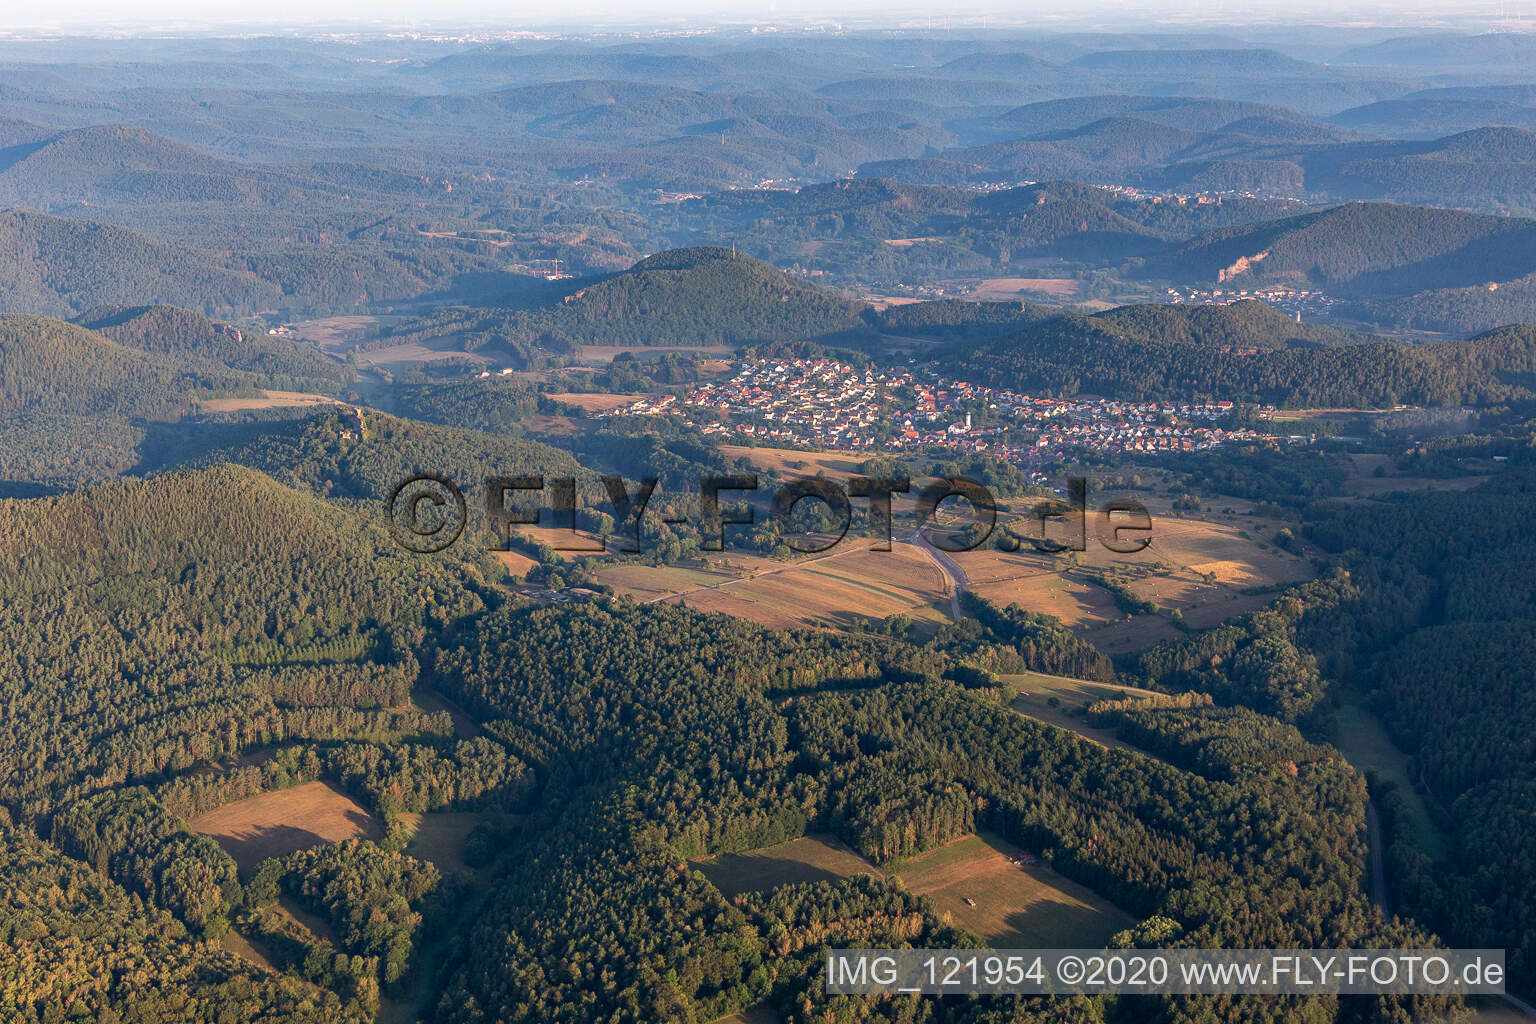 Bird's eye view of Busenberg in the state Rhineland-Palatinate, Germany